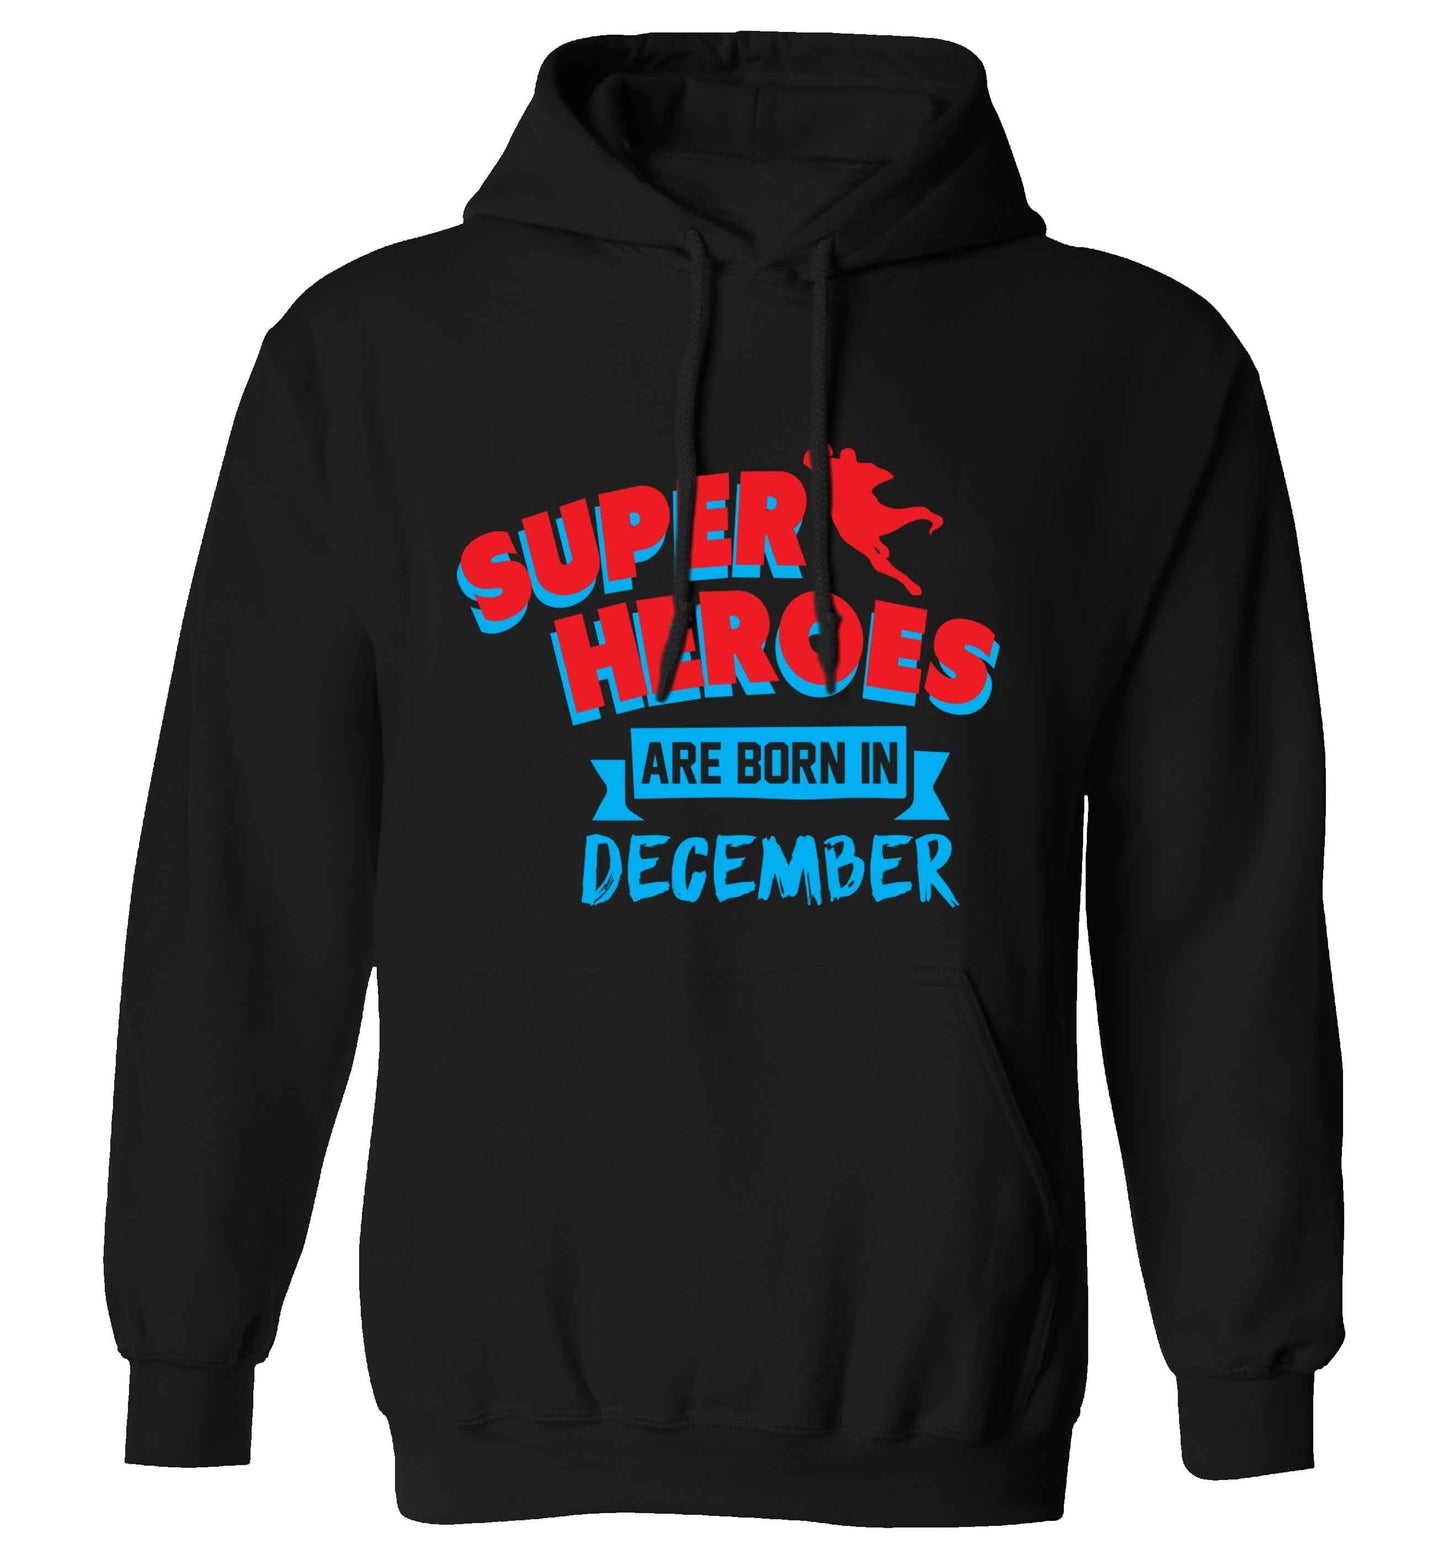 Superheroes are born in December adults unisex black hoodie 2XL